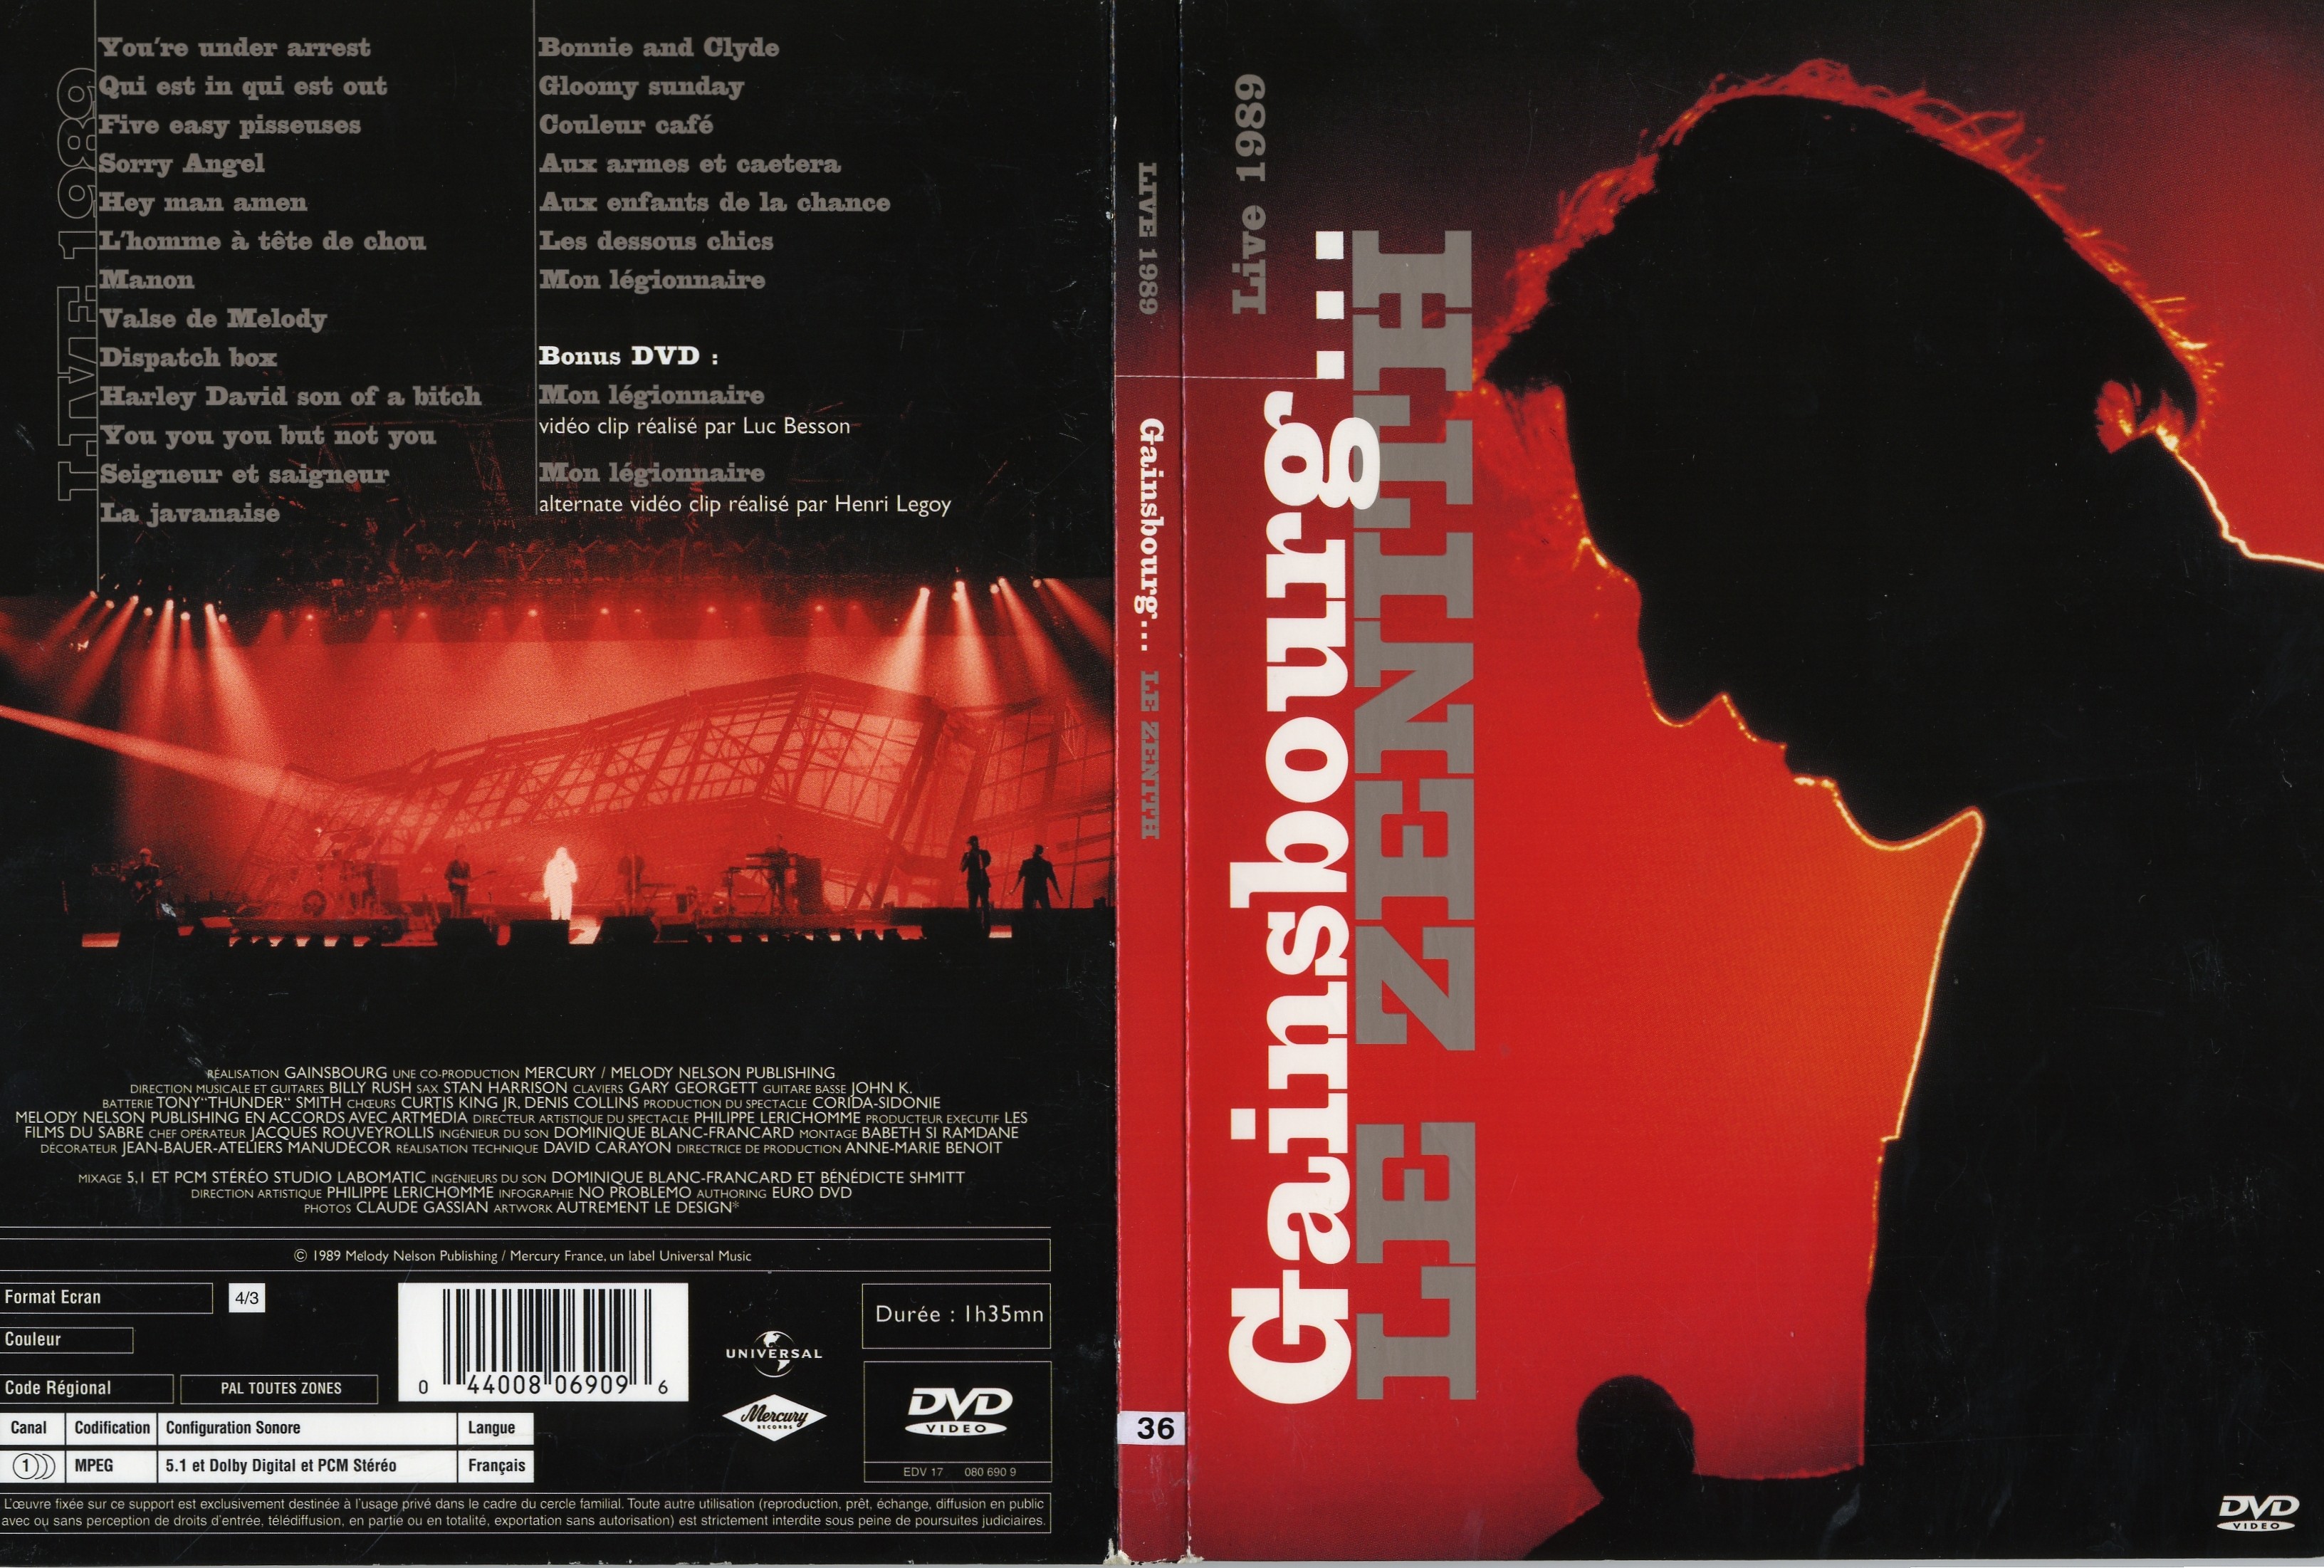 Jaquette DVD Gainsbourg live 1989 Zenith